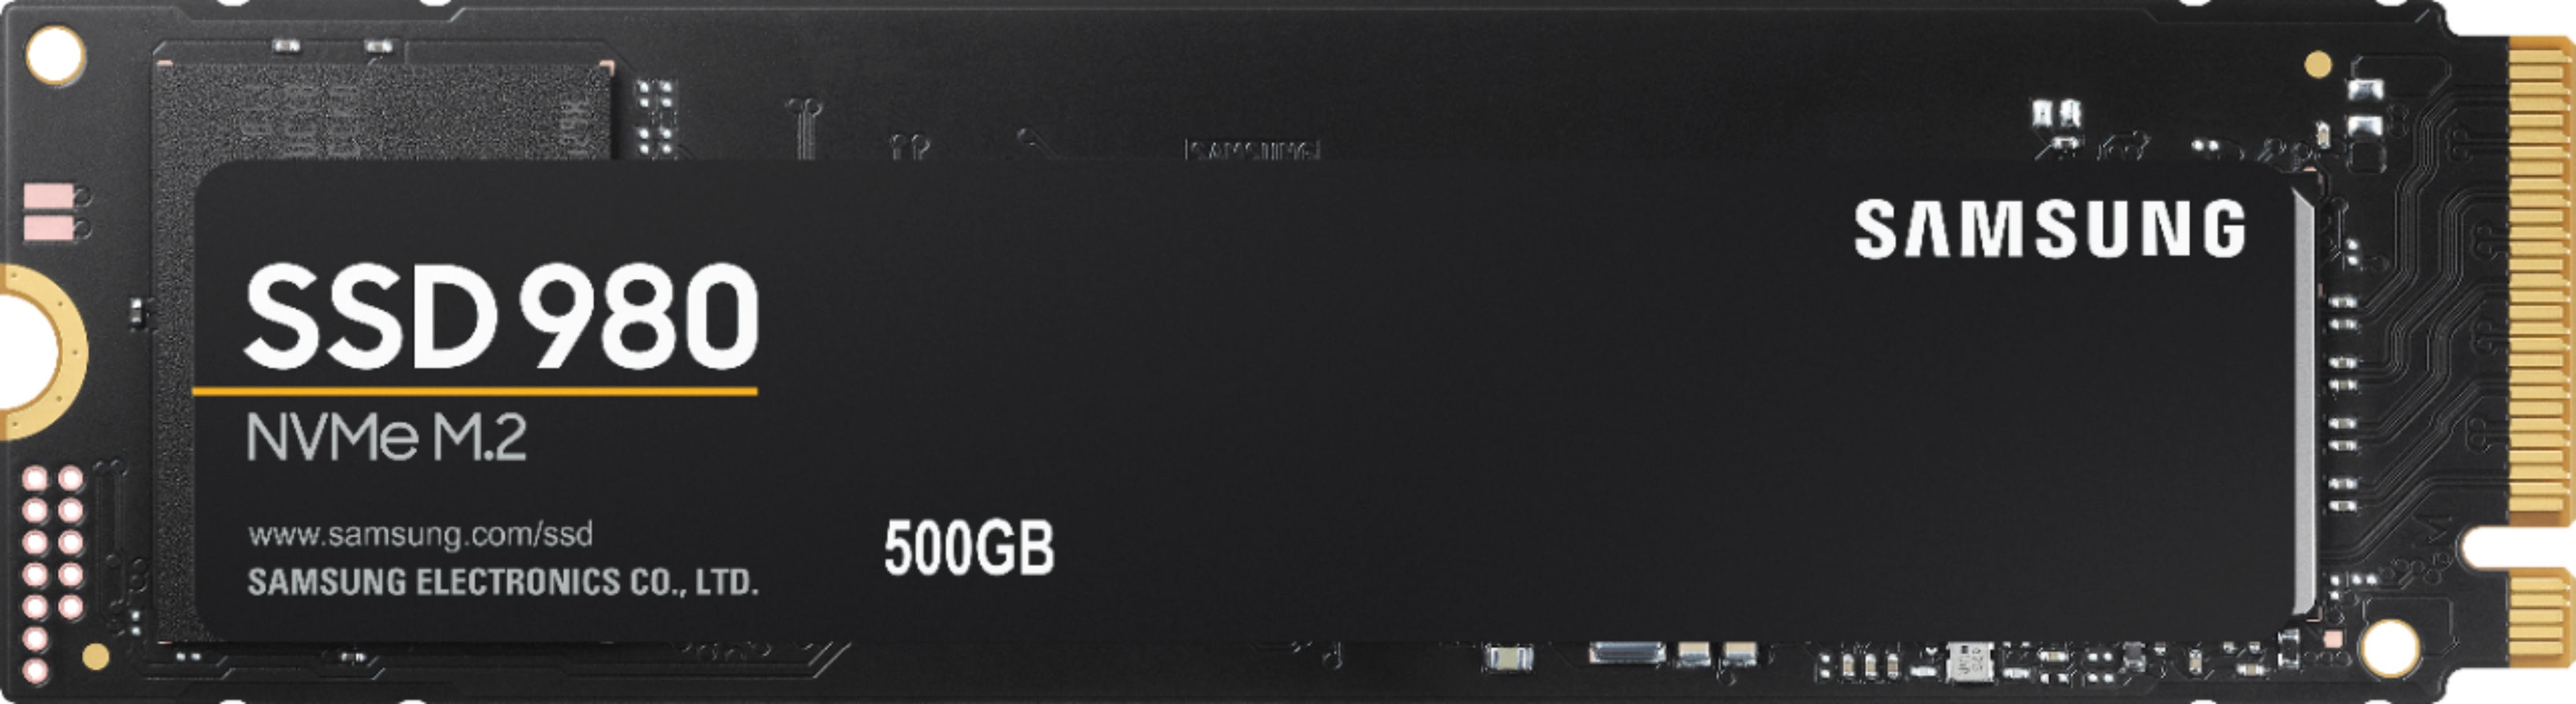 Samsung 980 500GB Internal Gaming SSD PCIe Gen 3 x4 NVMe MZ-V8V500B/AM - Buy